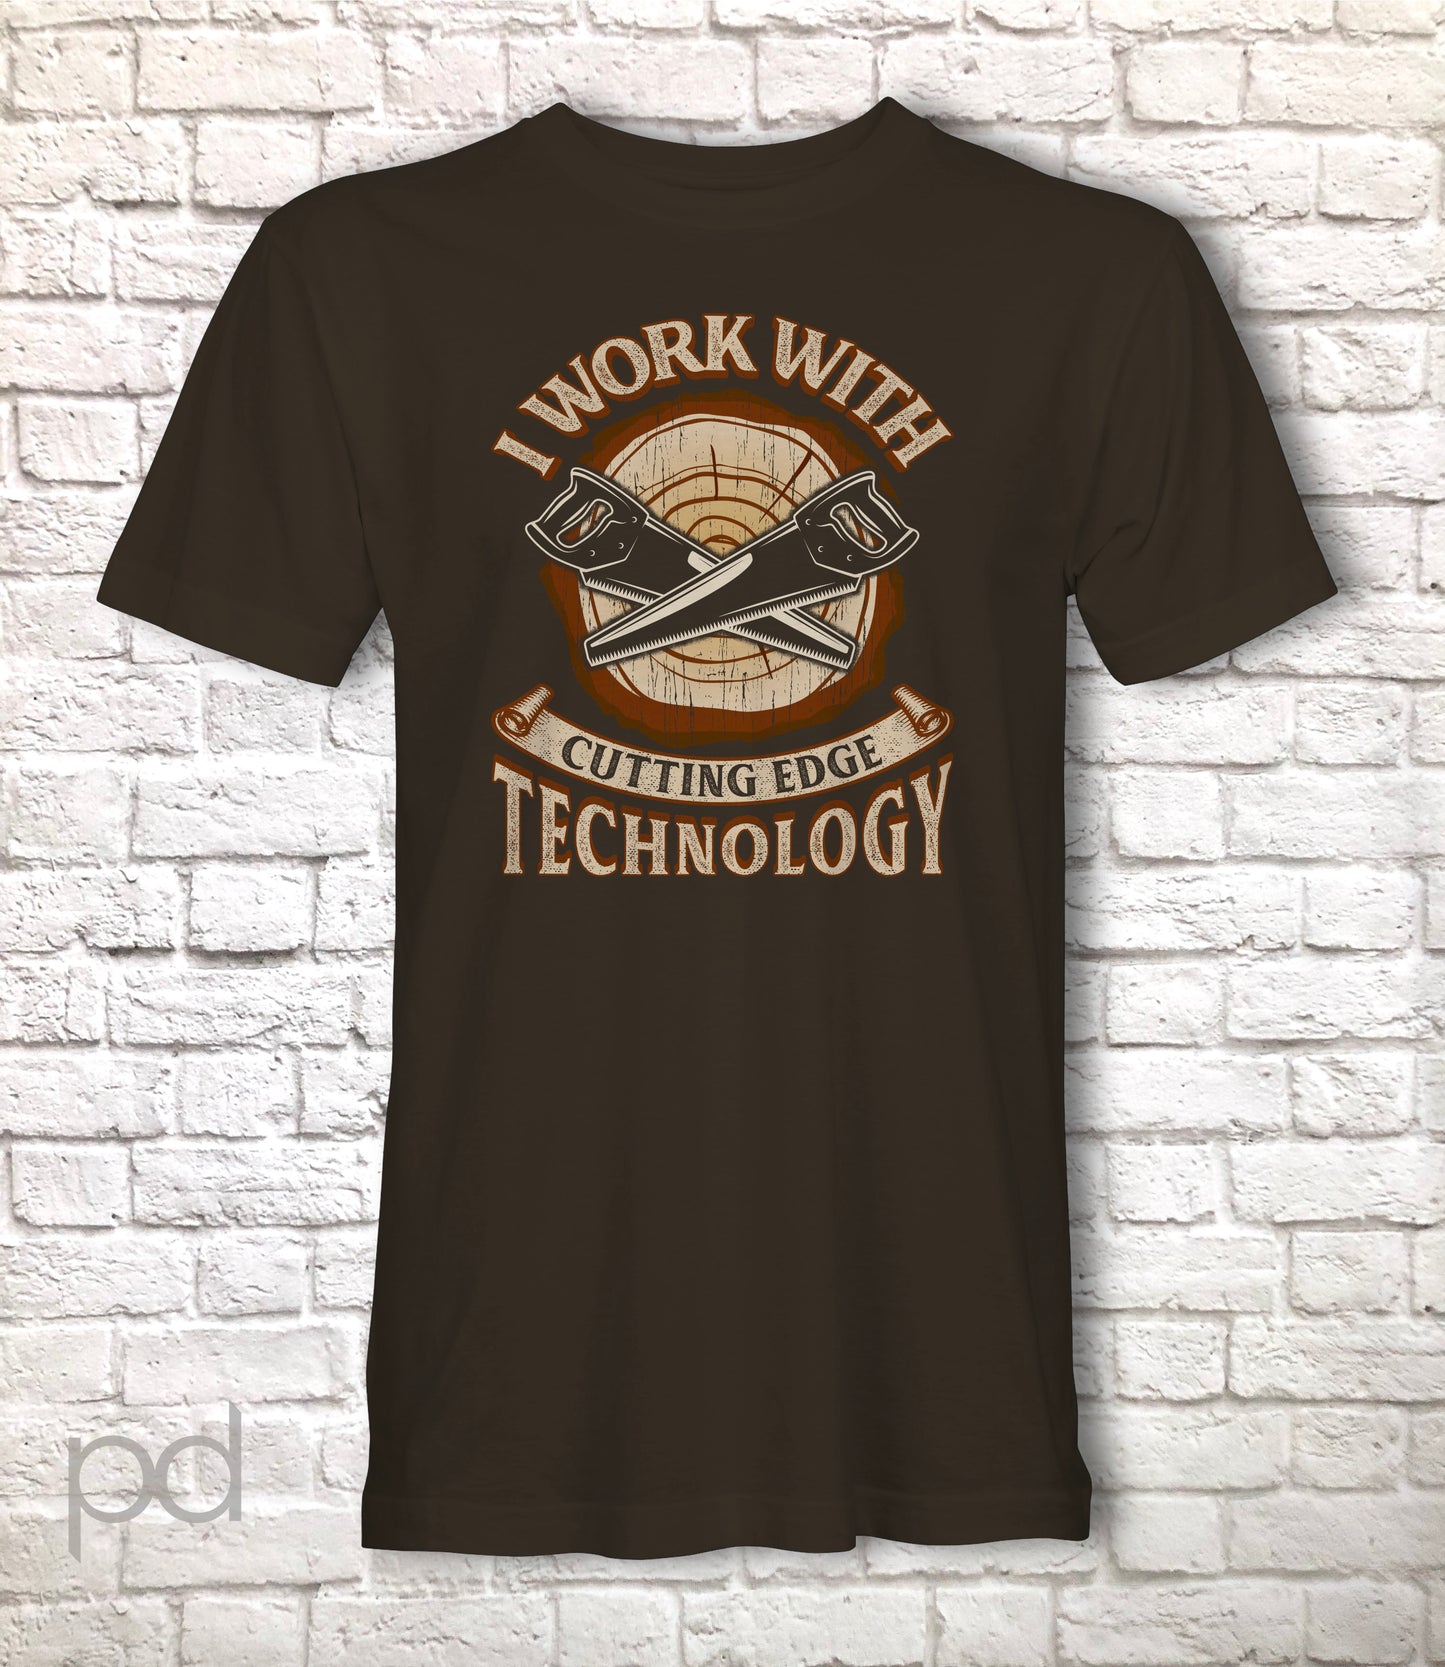 Funny Lumberjack T-Shirt Arborist Woodwork Saw Shirt, I Work With Cutting Edge Technology Pun Gift Idea, Humorous Handsaw Tee Top